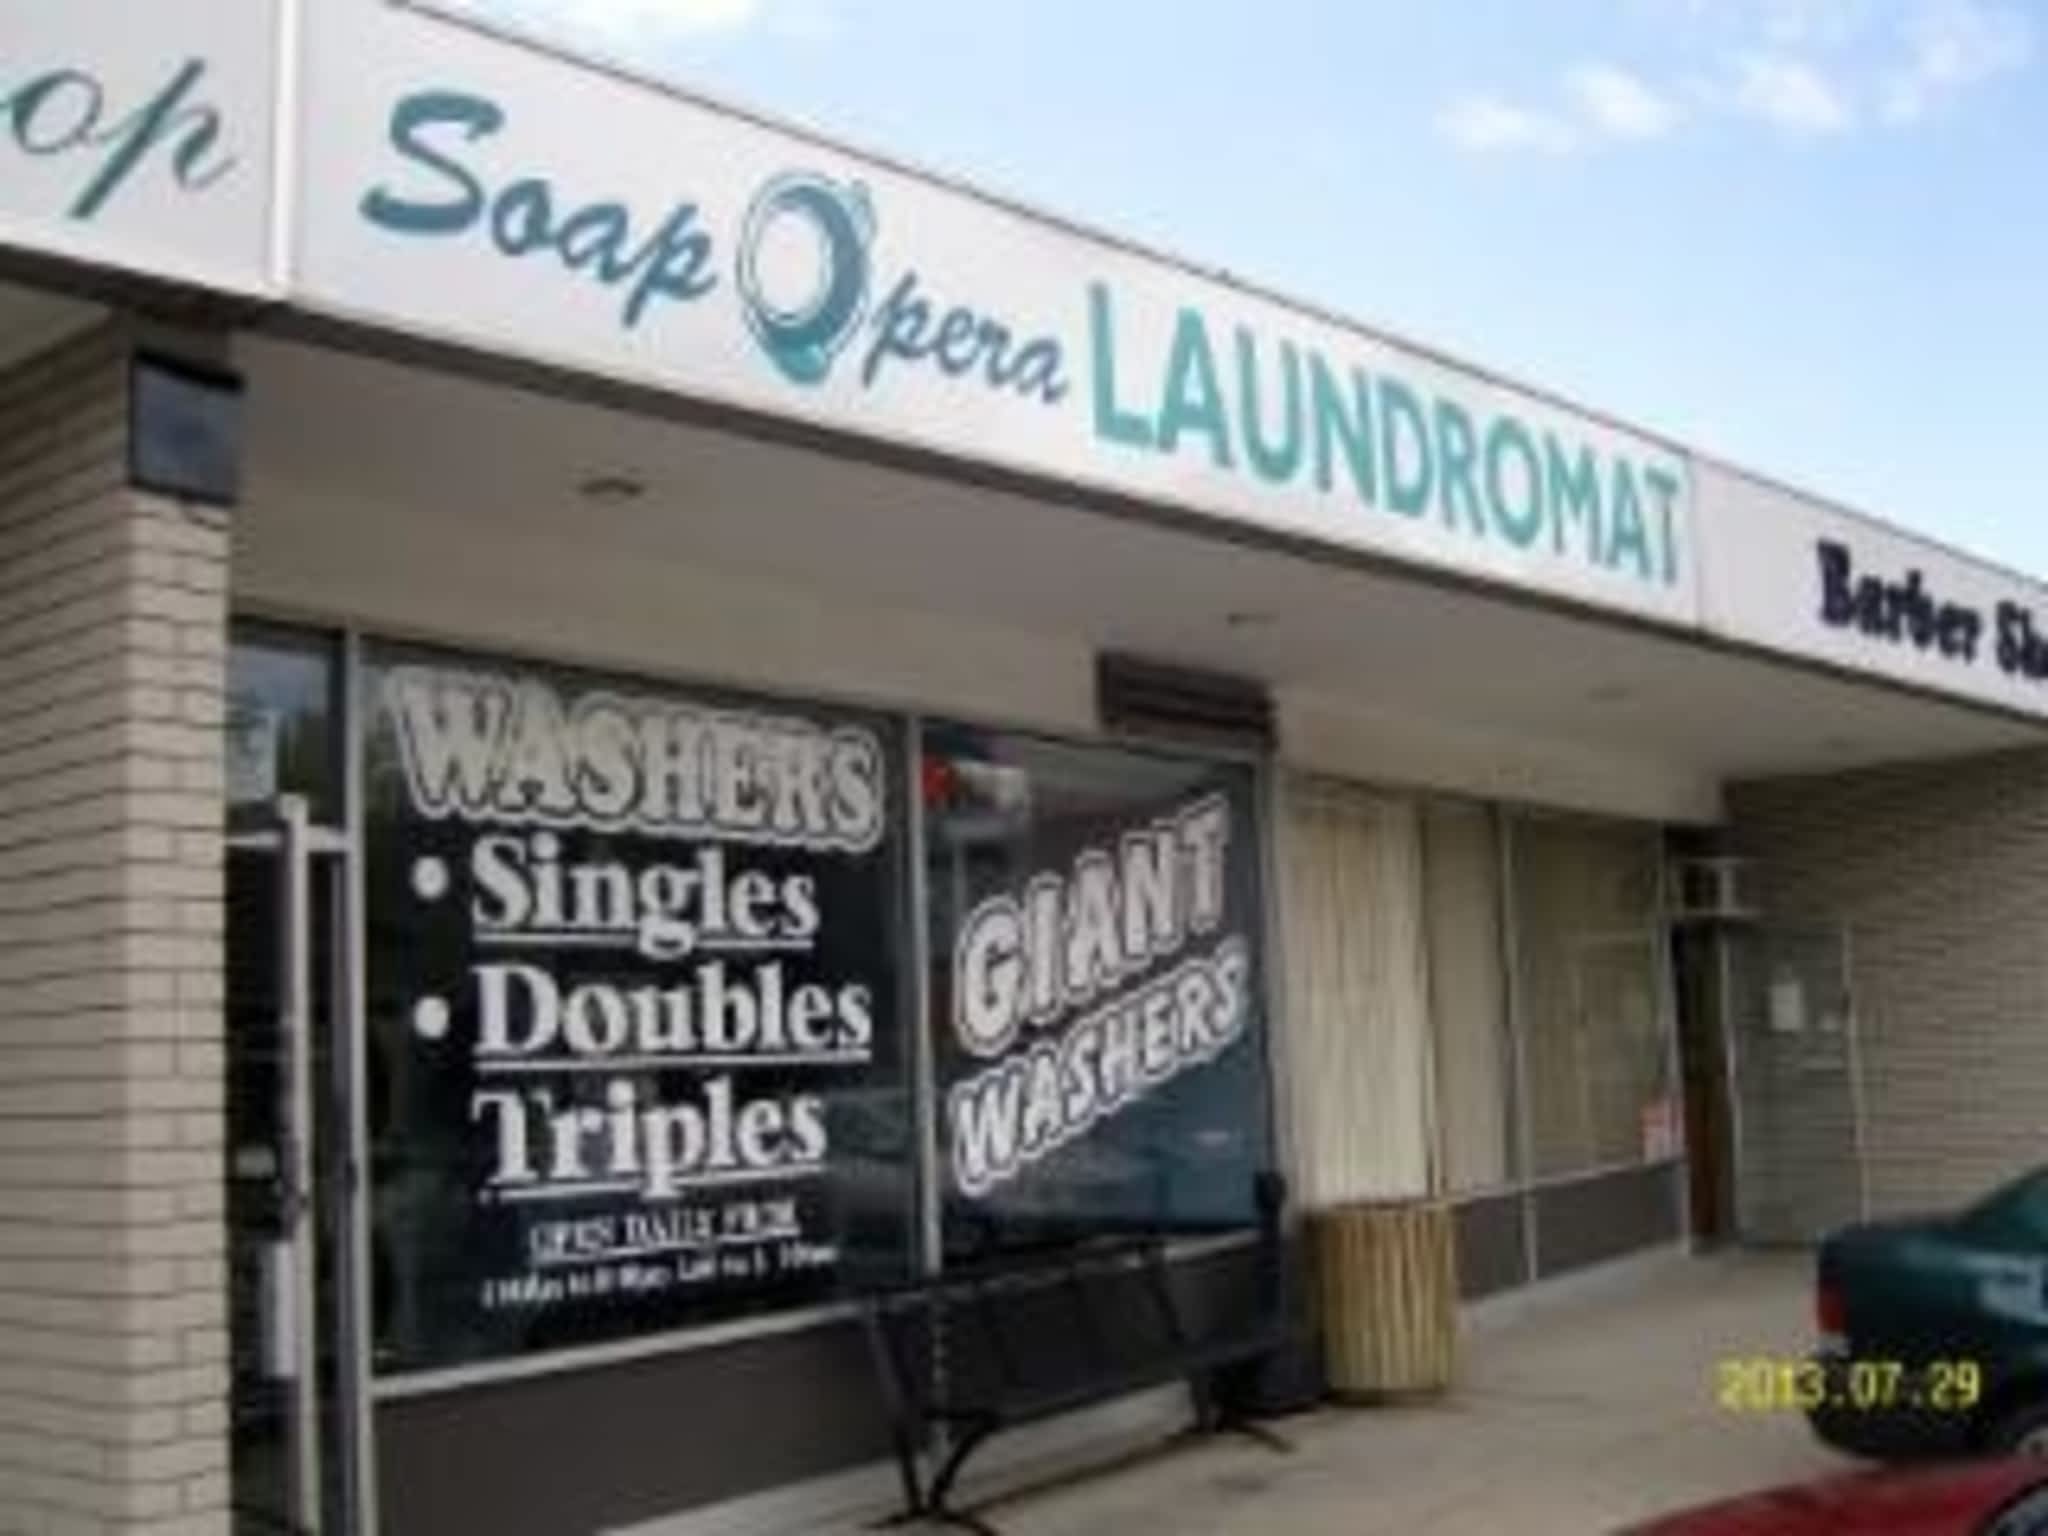 photo Soap Opera Laundromat - Weston